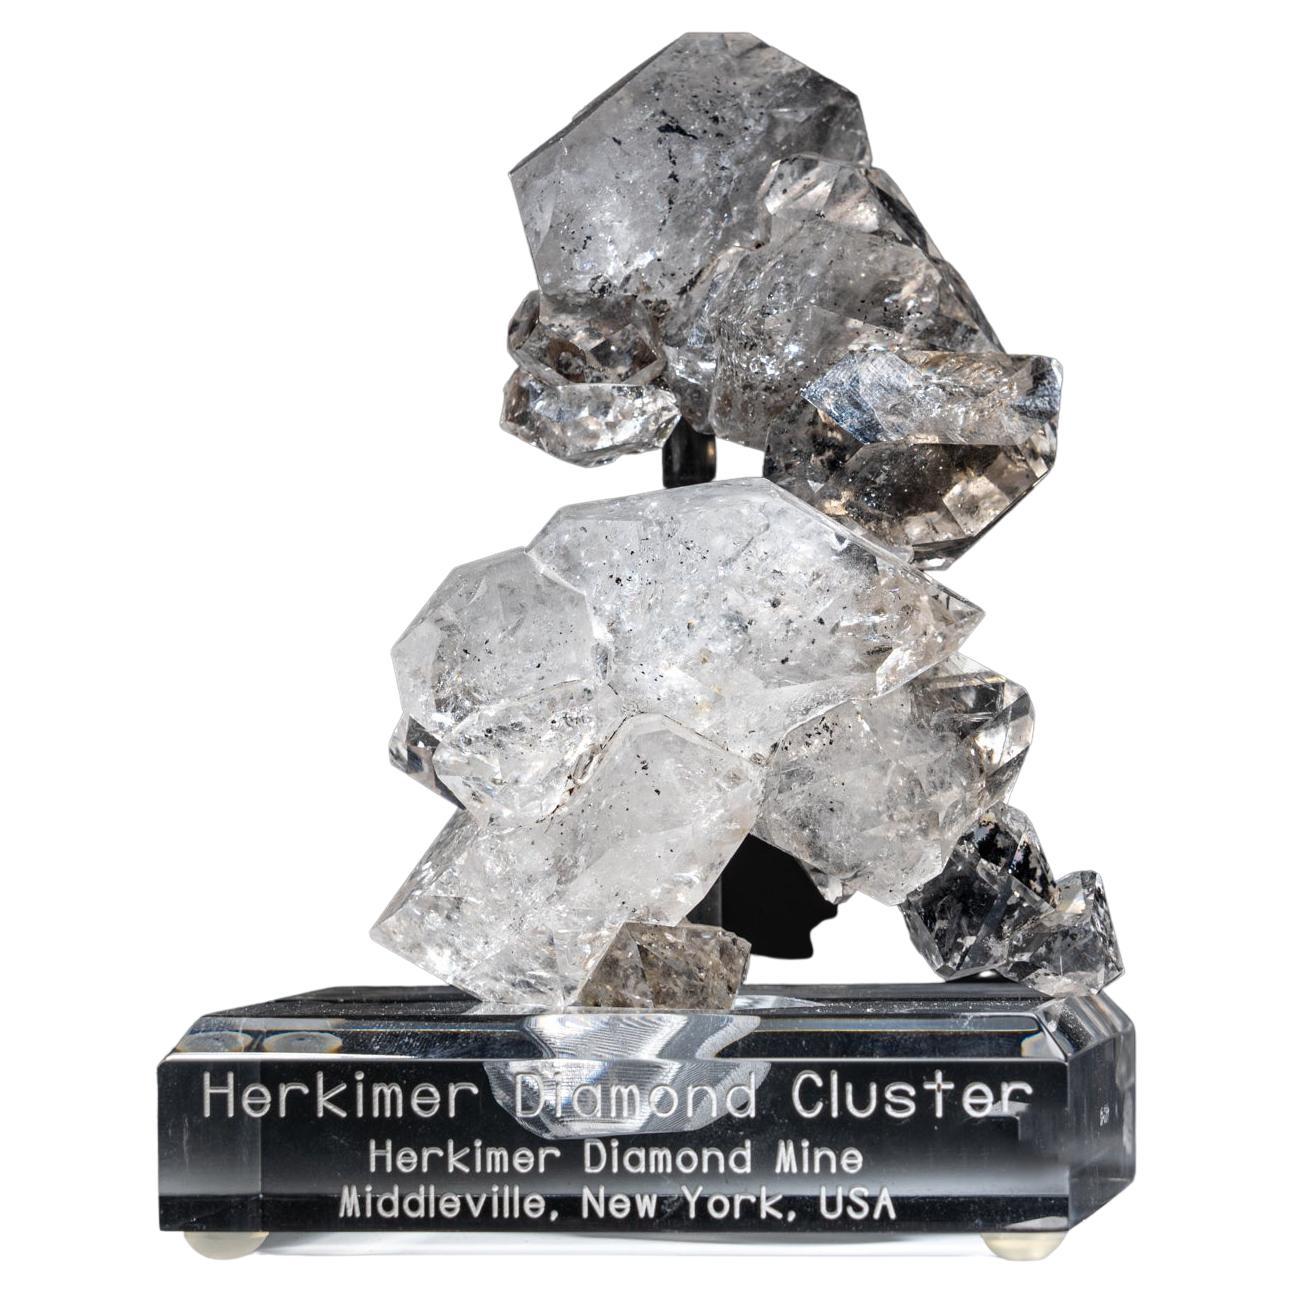 Amas de quartz de Herkimer provenant du County de Herkimer, New York